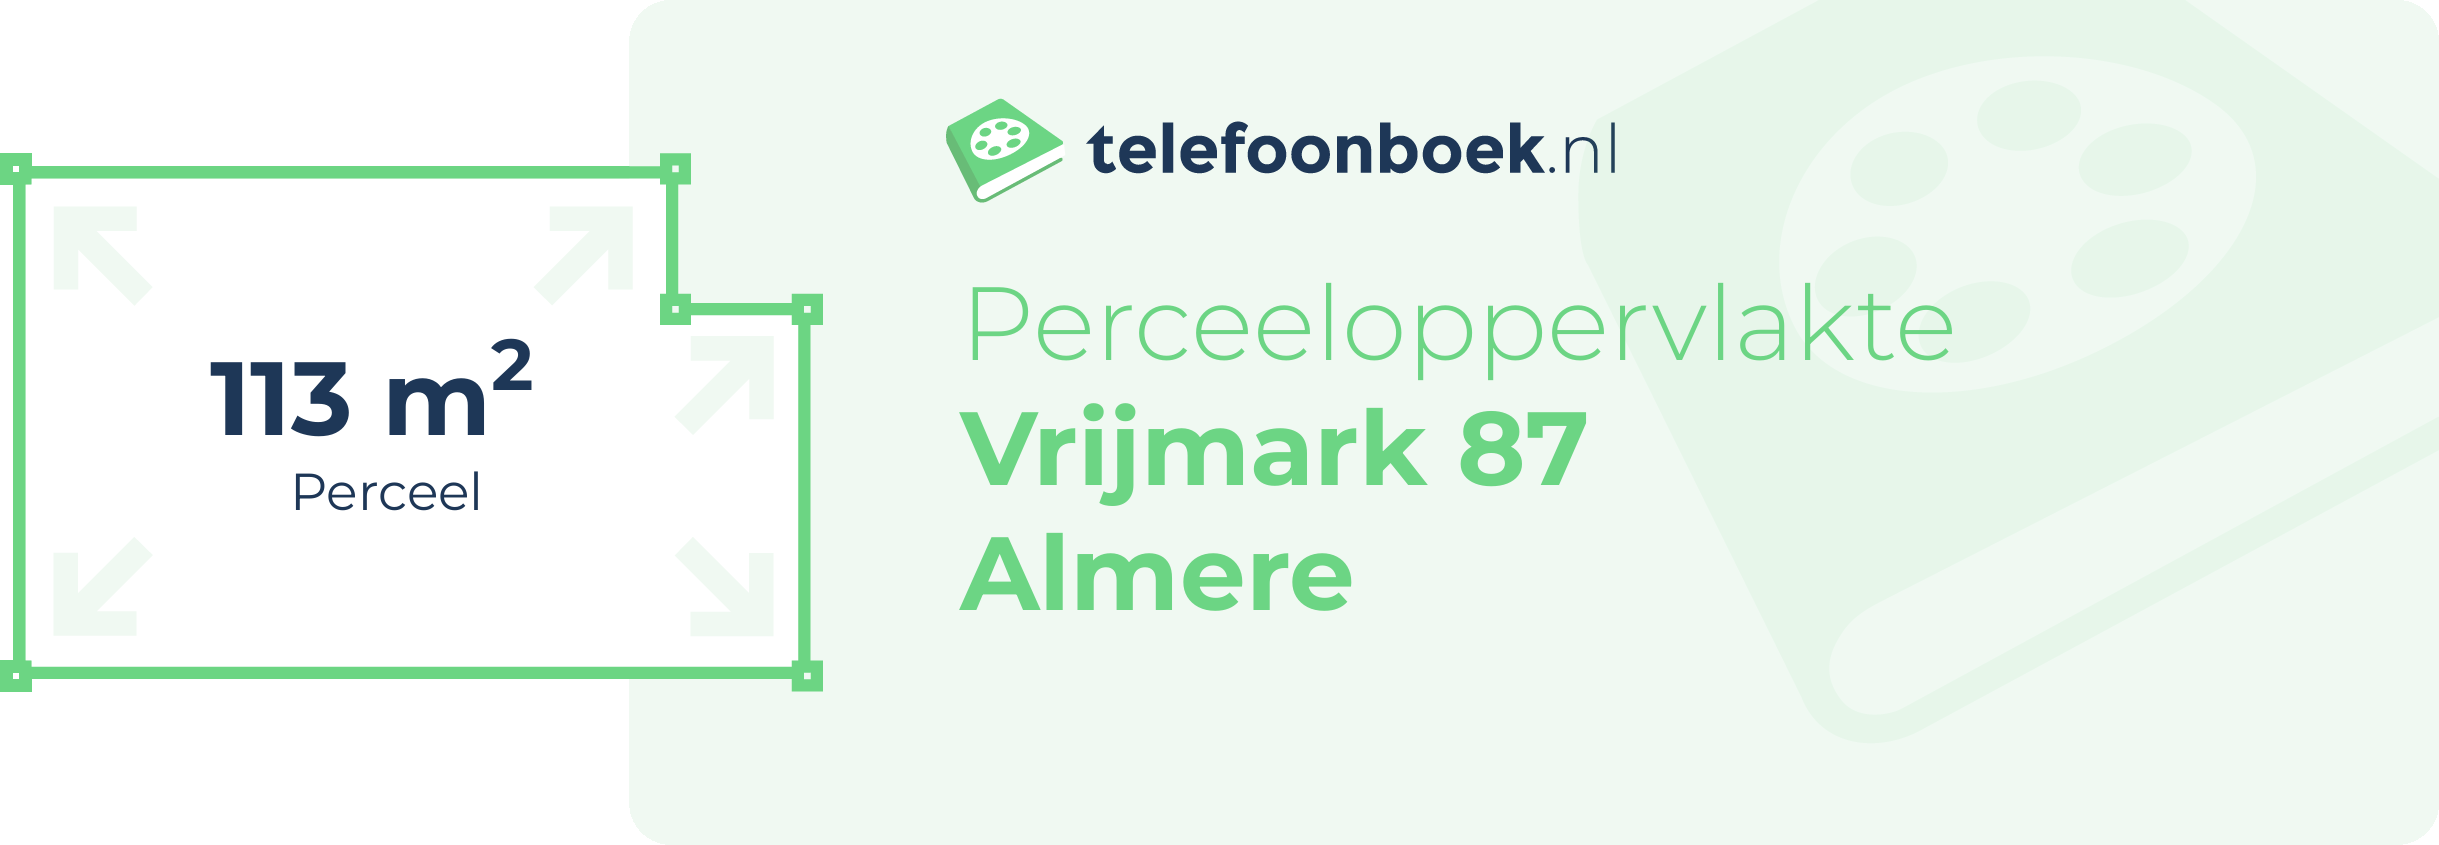 Perceeloppervlakte Vrijmark 87 Almere